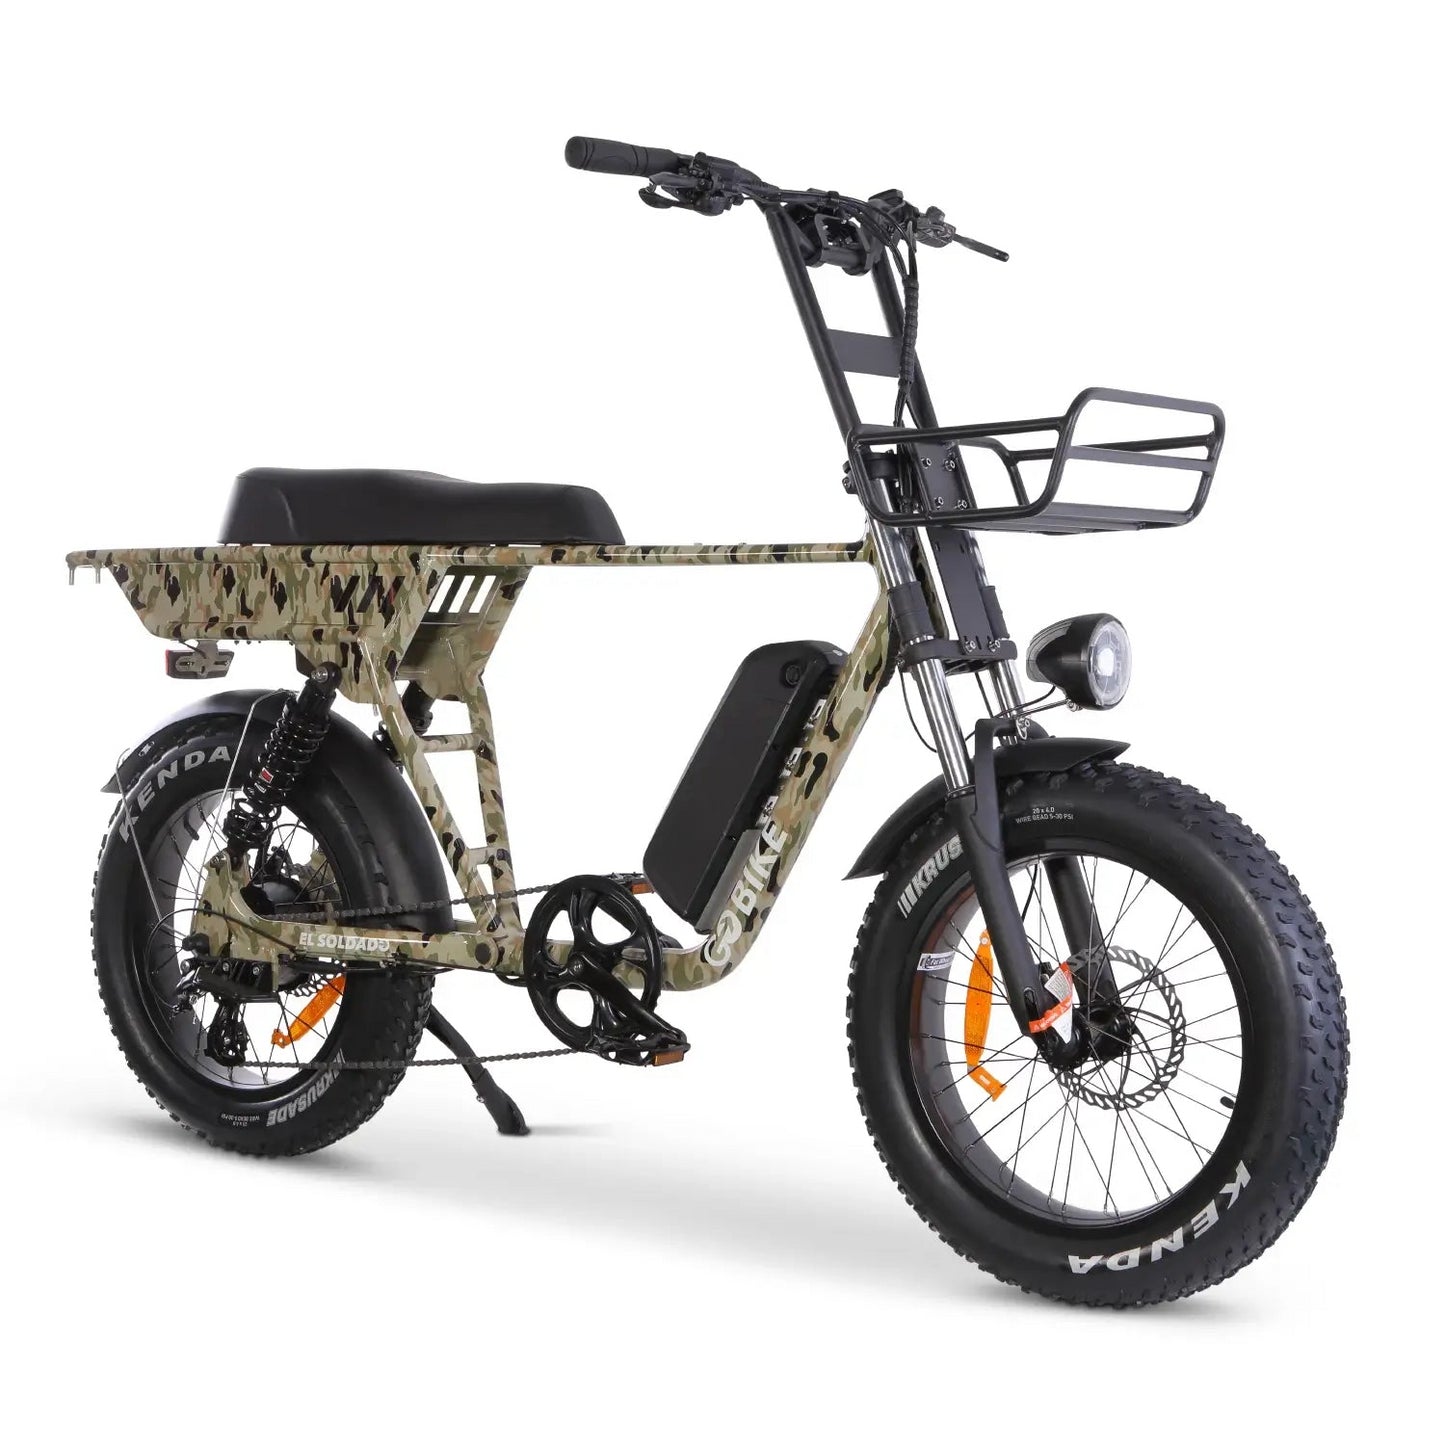 GOBIKE SOLDADO Lightweight Dual-Passenger Electric Bike-My Perfect Scooter